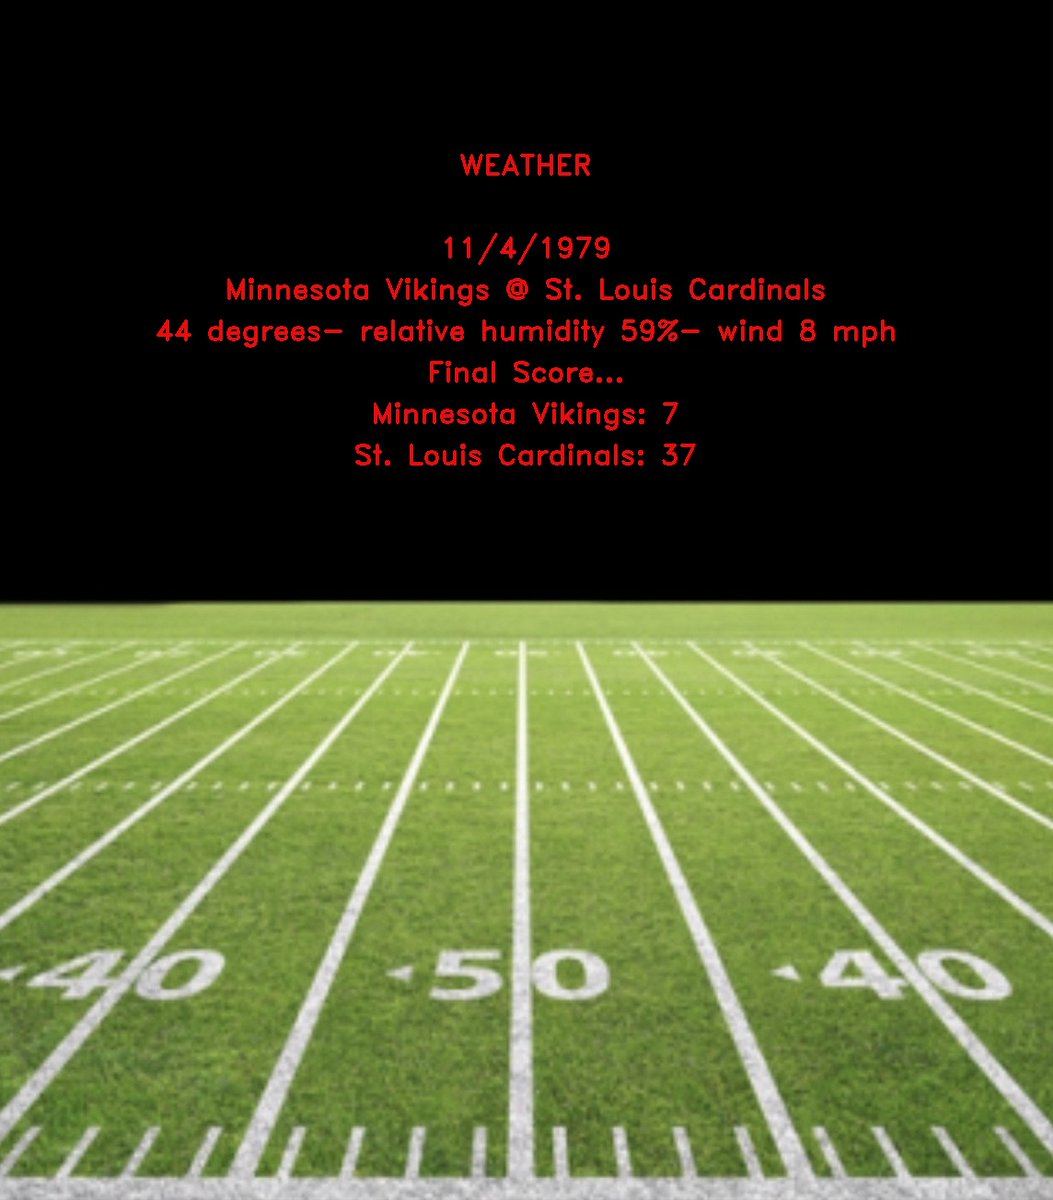 WEATHER

11/4/1979
Minnesota Vikings @ St. Louis Cardinals
44 degrees- relative humidity 59%- wind 8 mph
Final Score...
Minnesota Vikings: 7
St. Louis Cardinals: 37

#NFL #RedSea #SKOL https://t.co/RUrOQ4otij